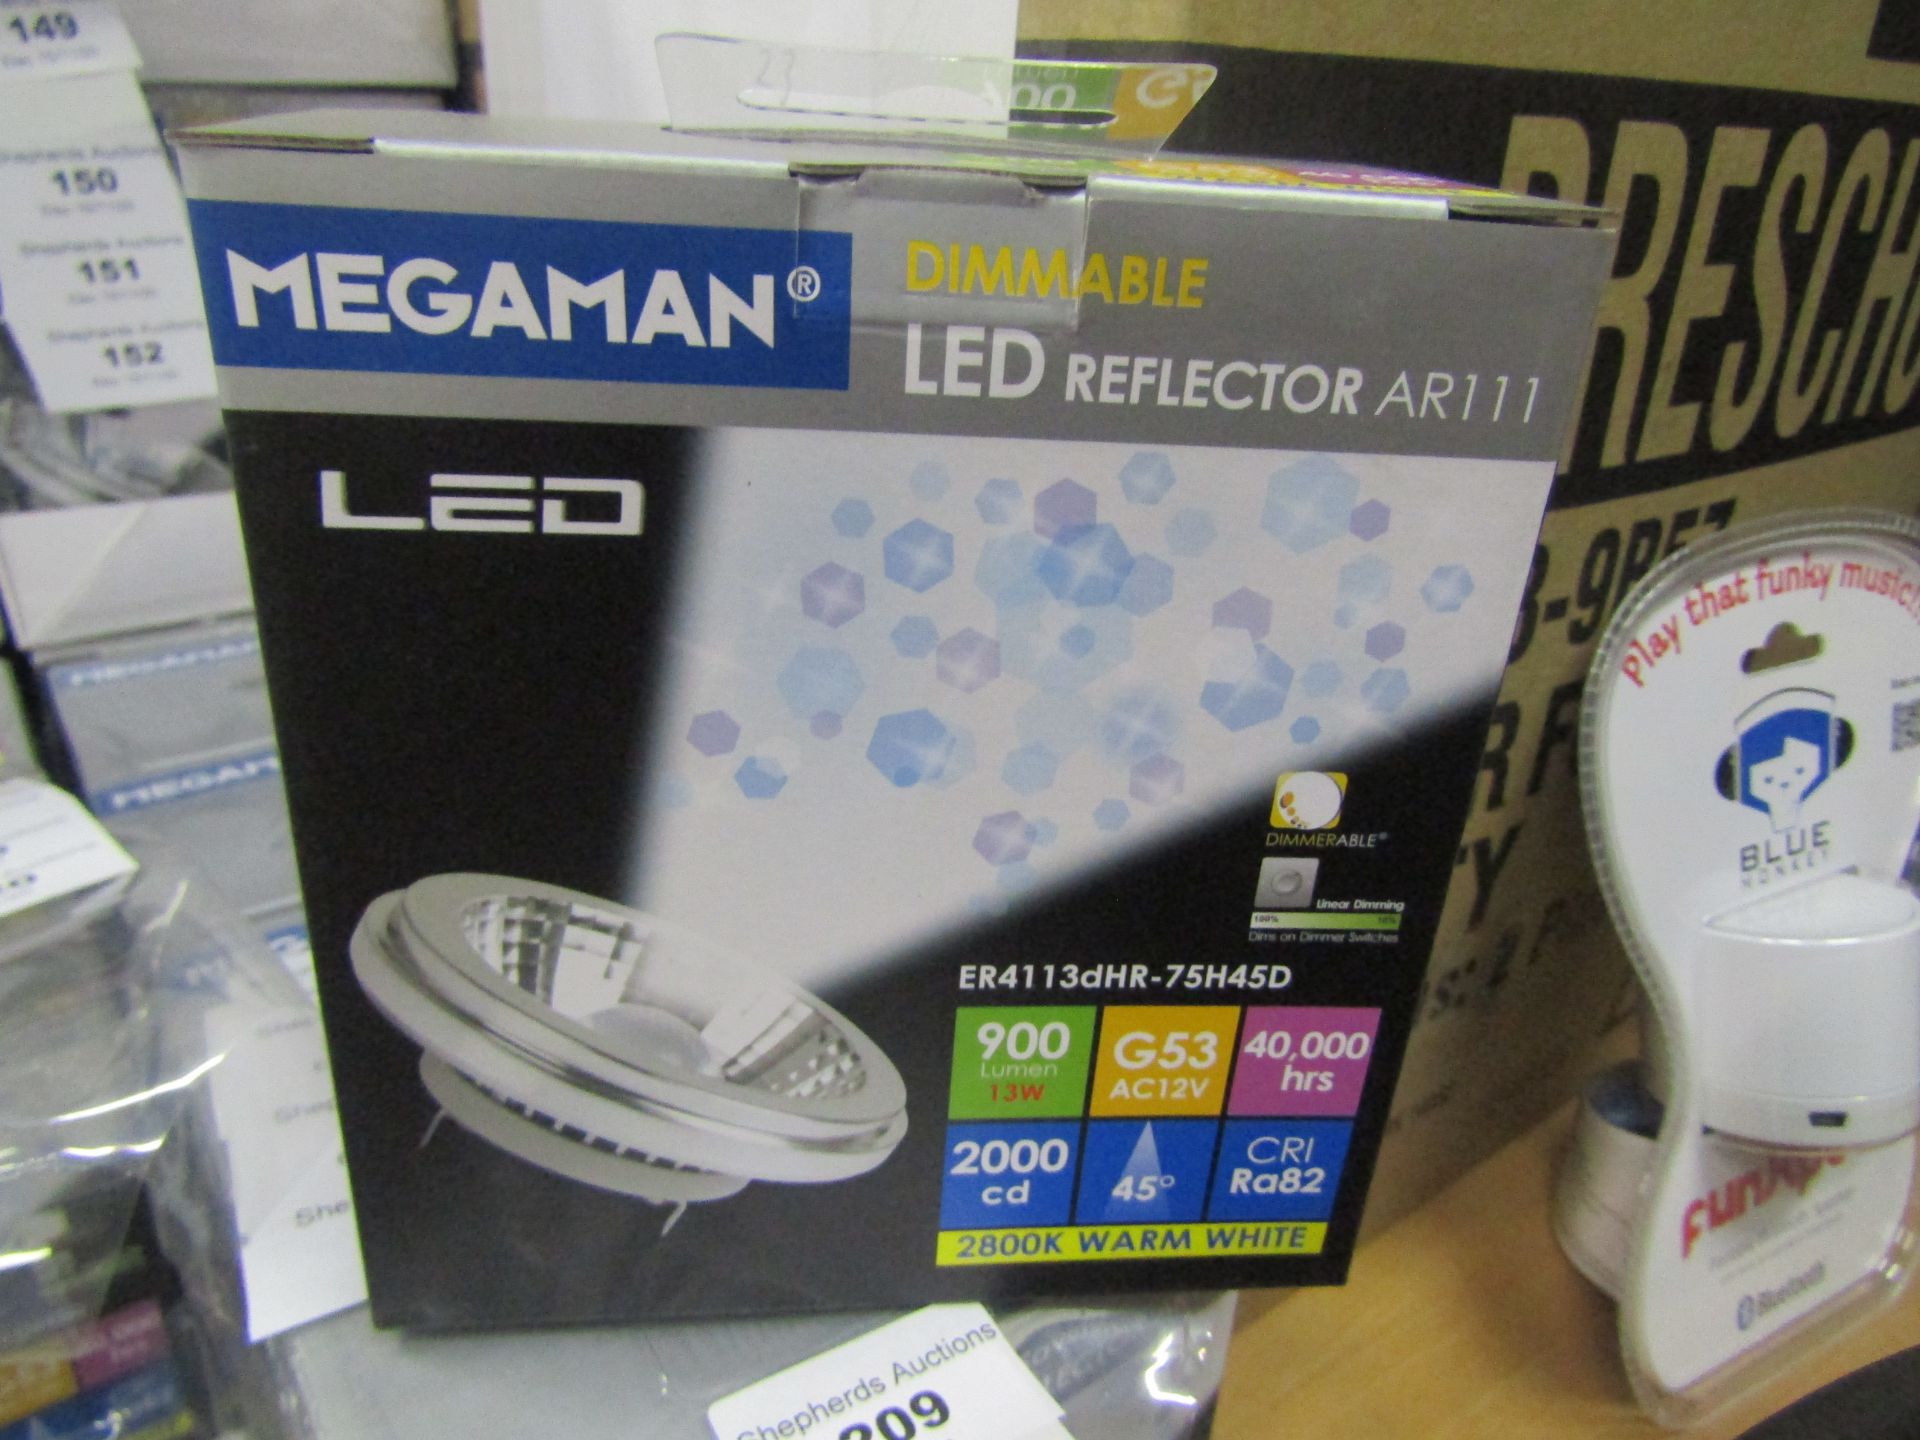 Megaman LED reflector AR111 light bulb, new and boxed. G53 / 40,000Hrs / 630 Lumens